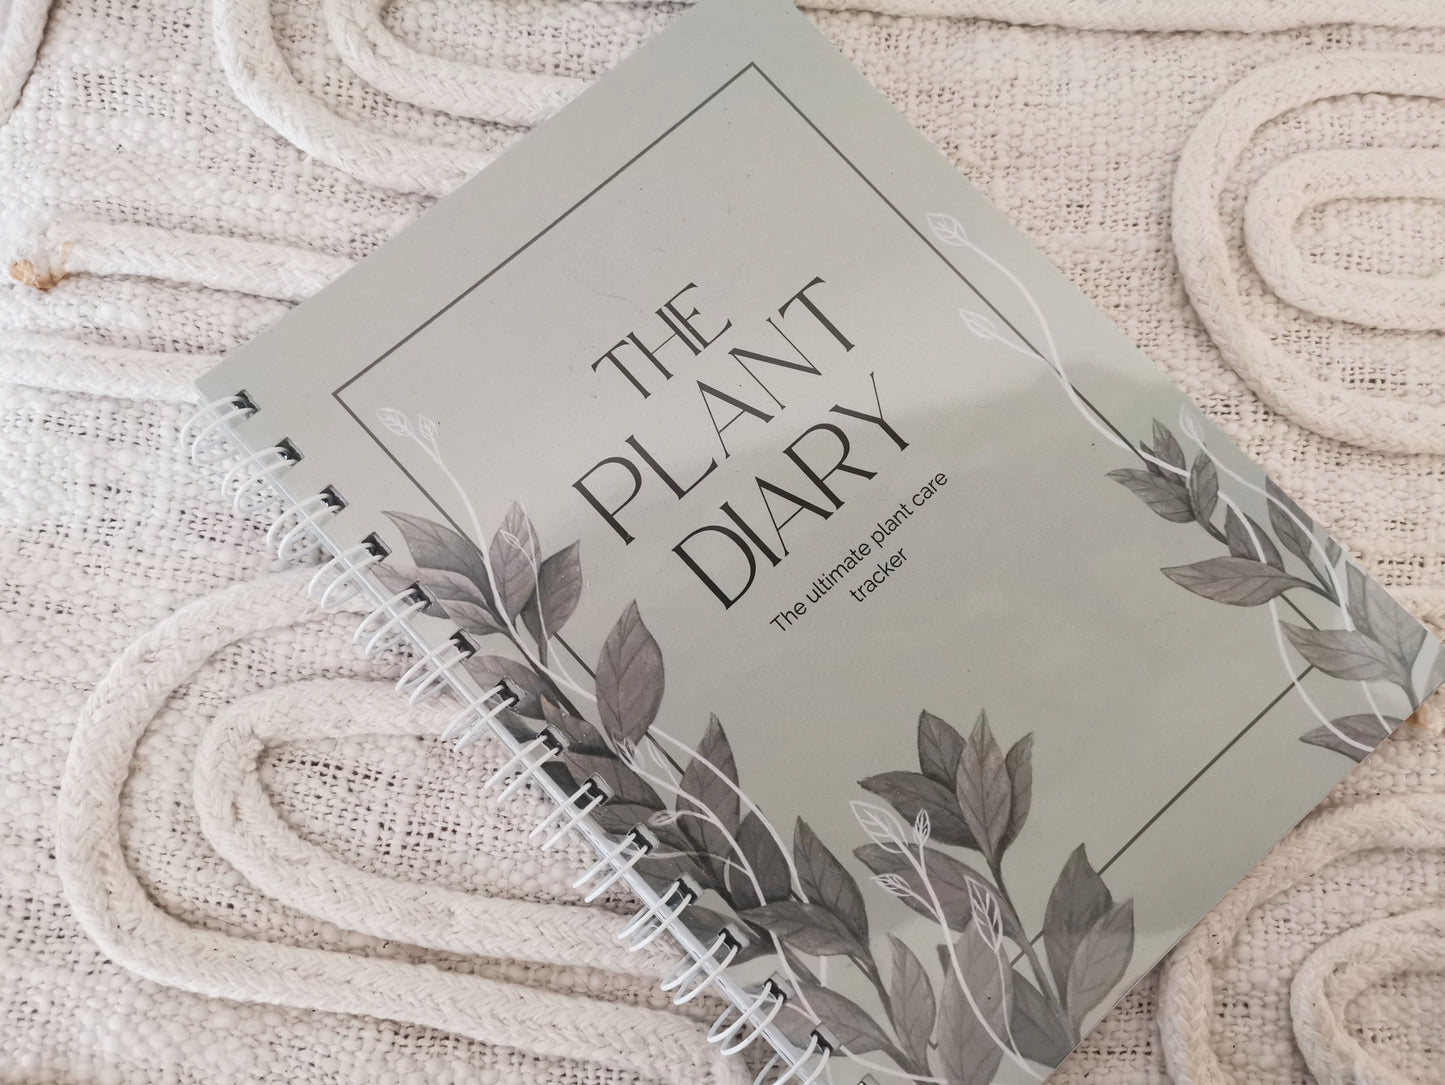 Plant Diary